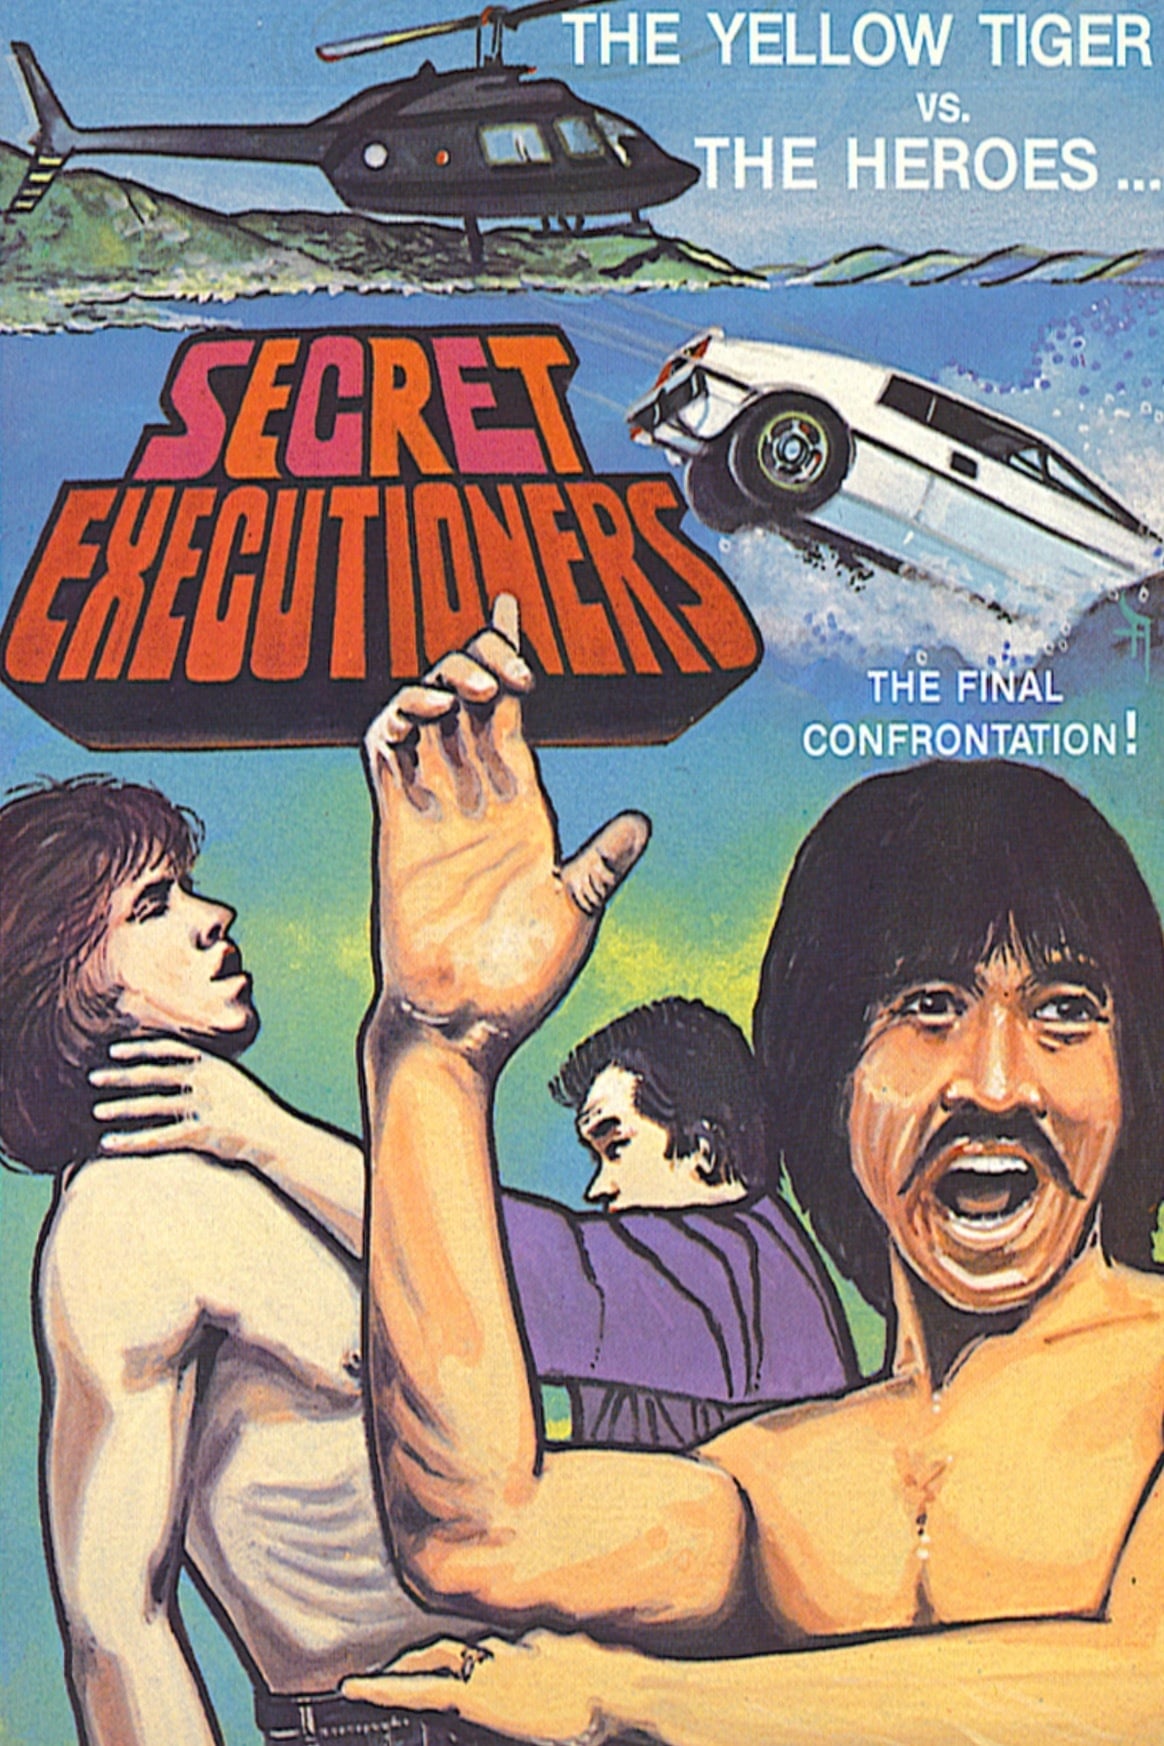 Secret Executioners (1982)